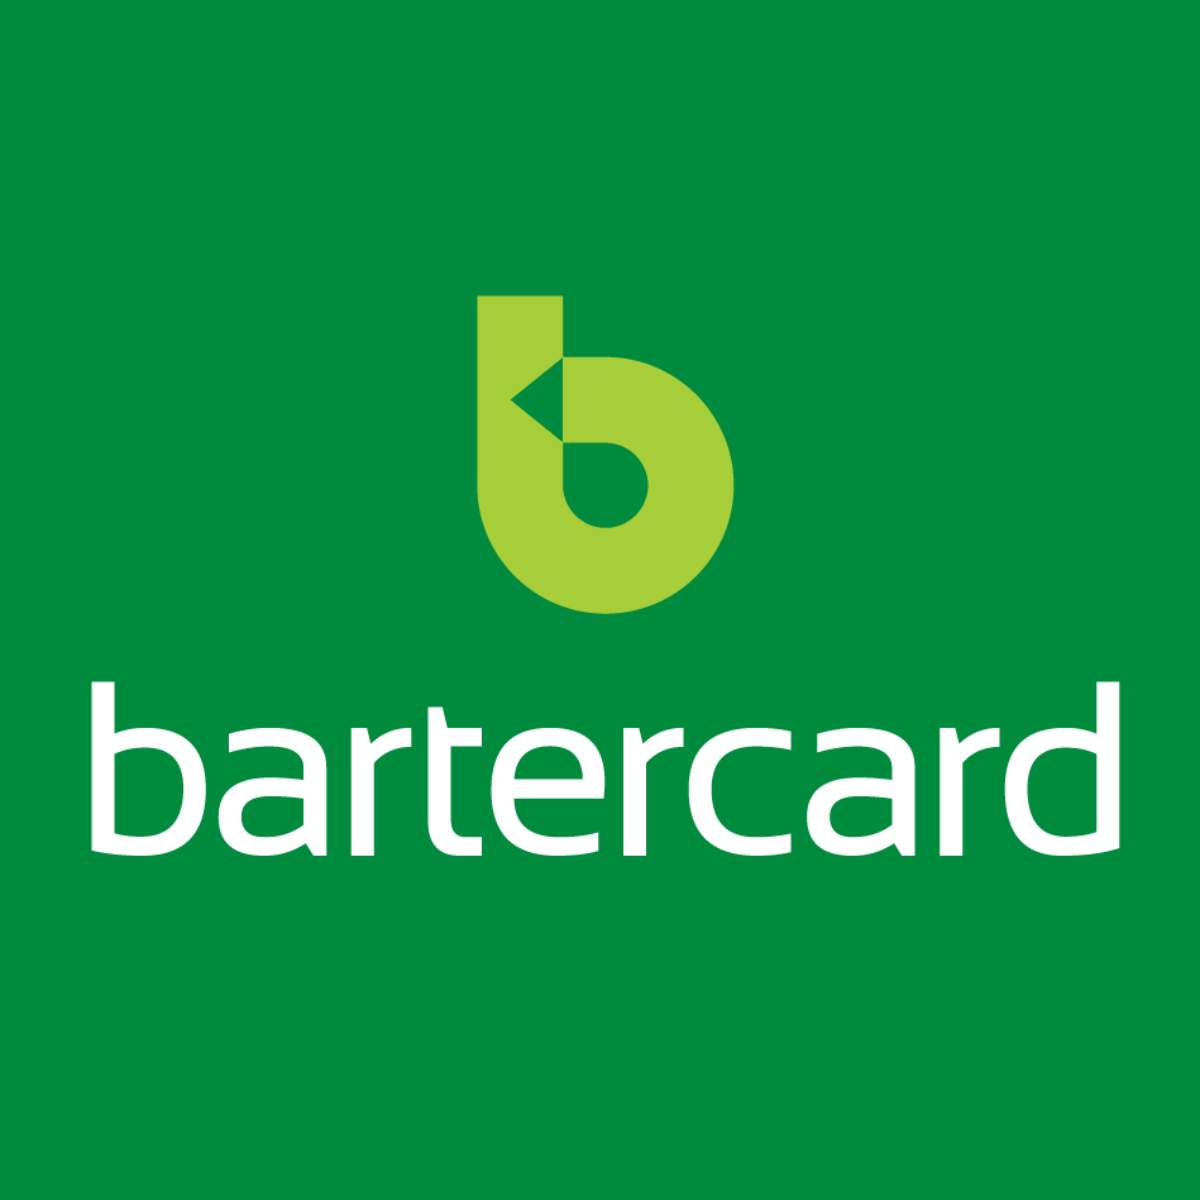 Bartercard (Thailand) Ltd